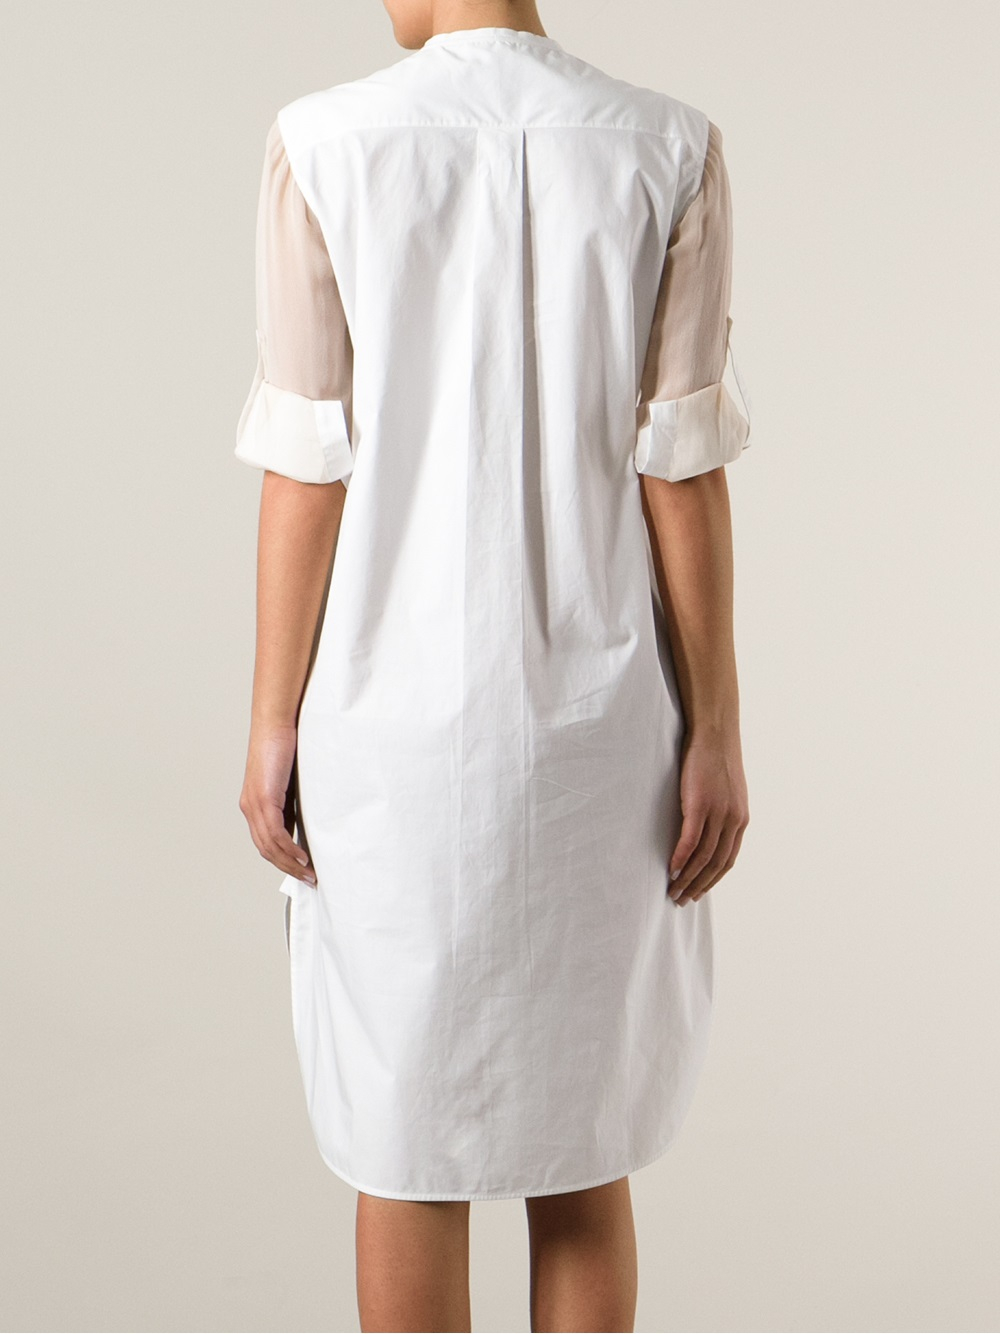 Lyst - Amen Semi Sheer Shirt Dress in White